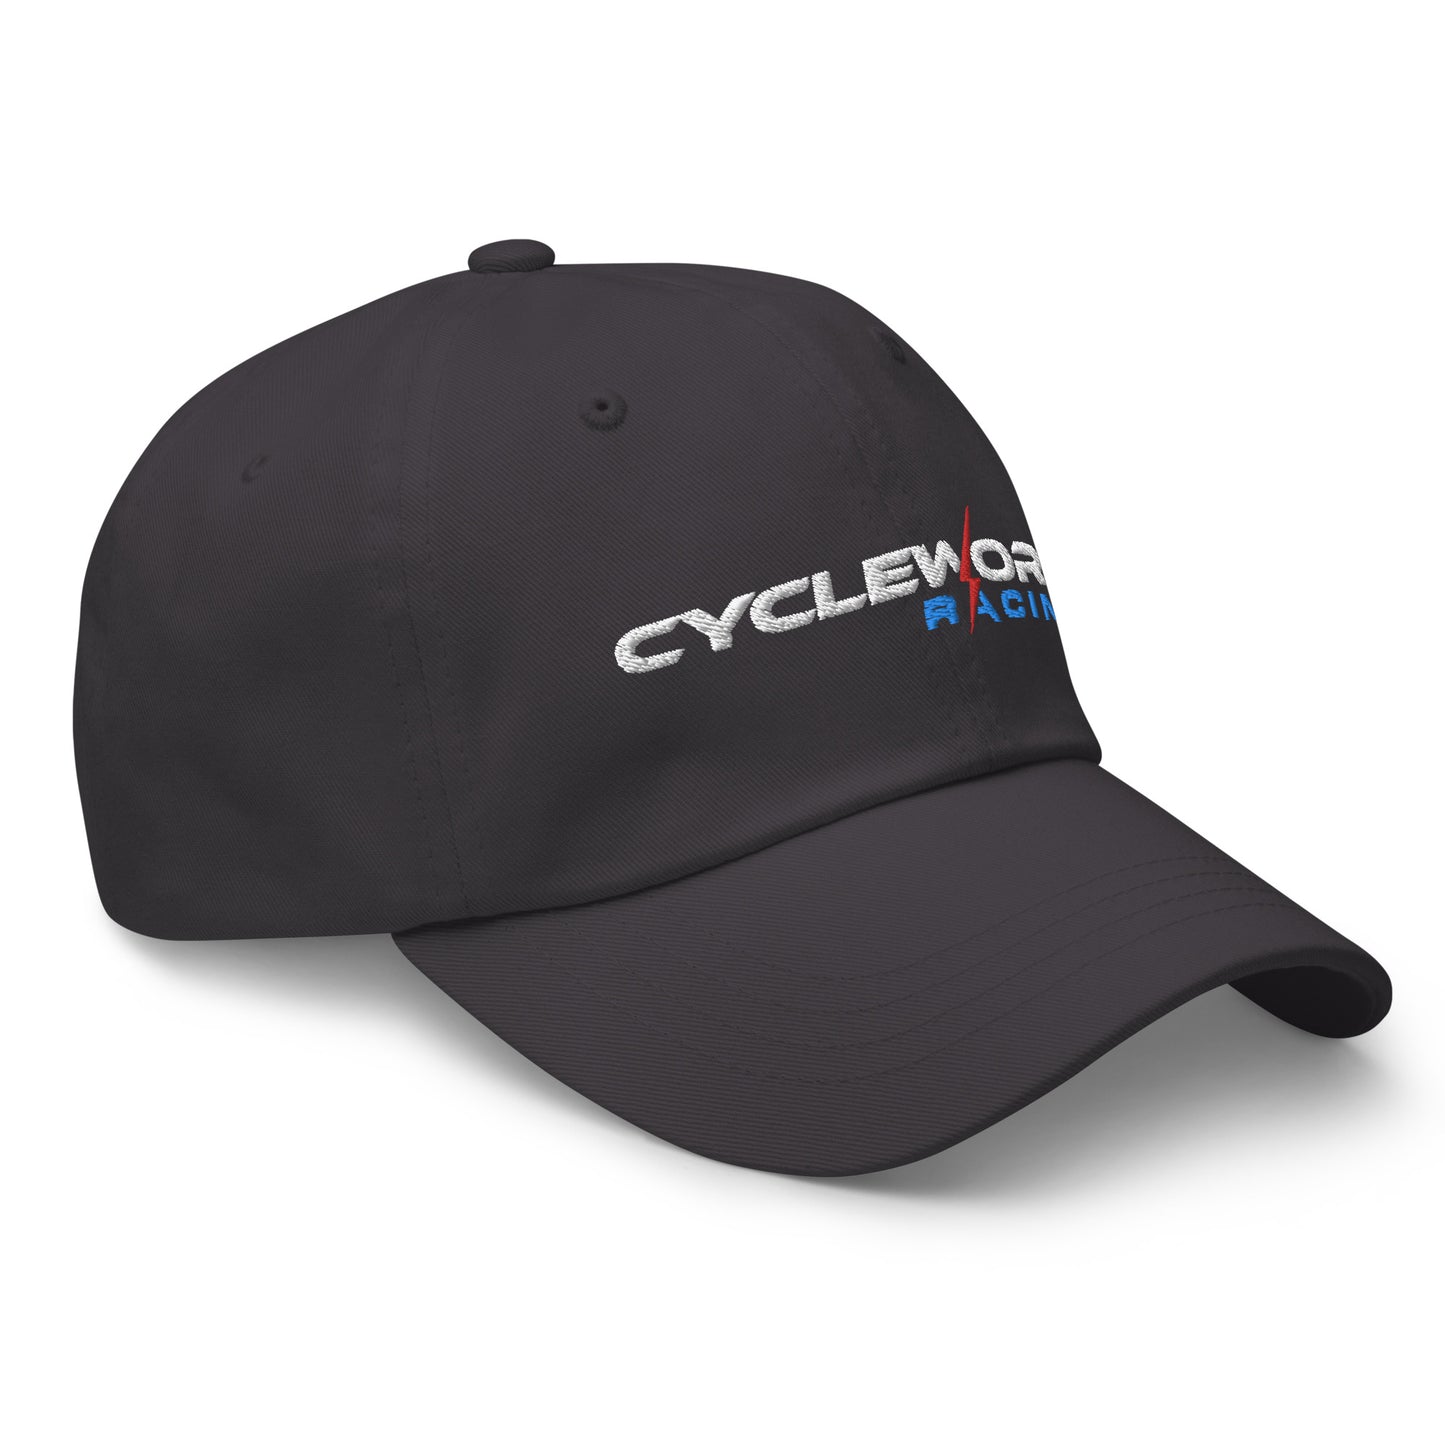 Cycleworx Racing Adjustable Hat